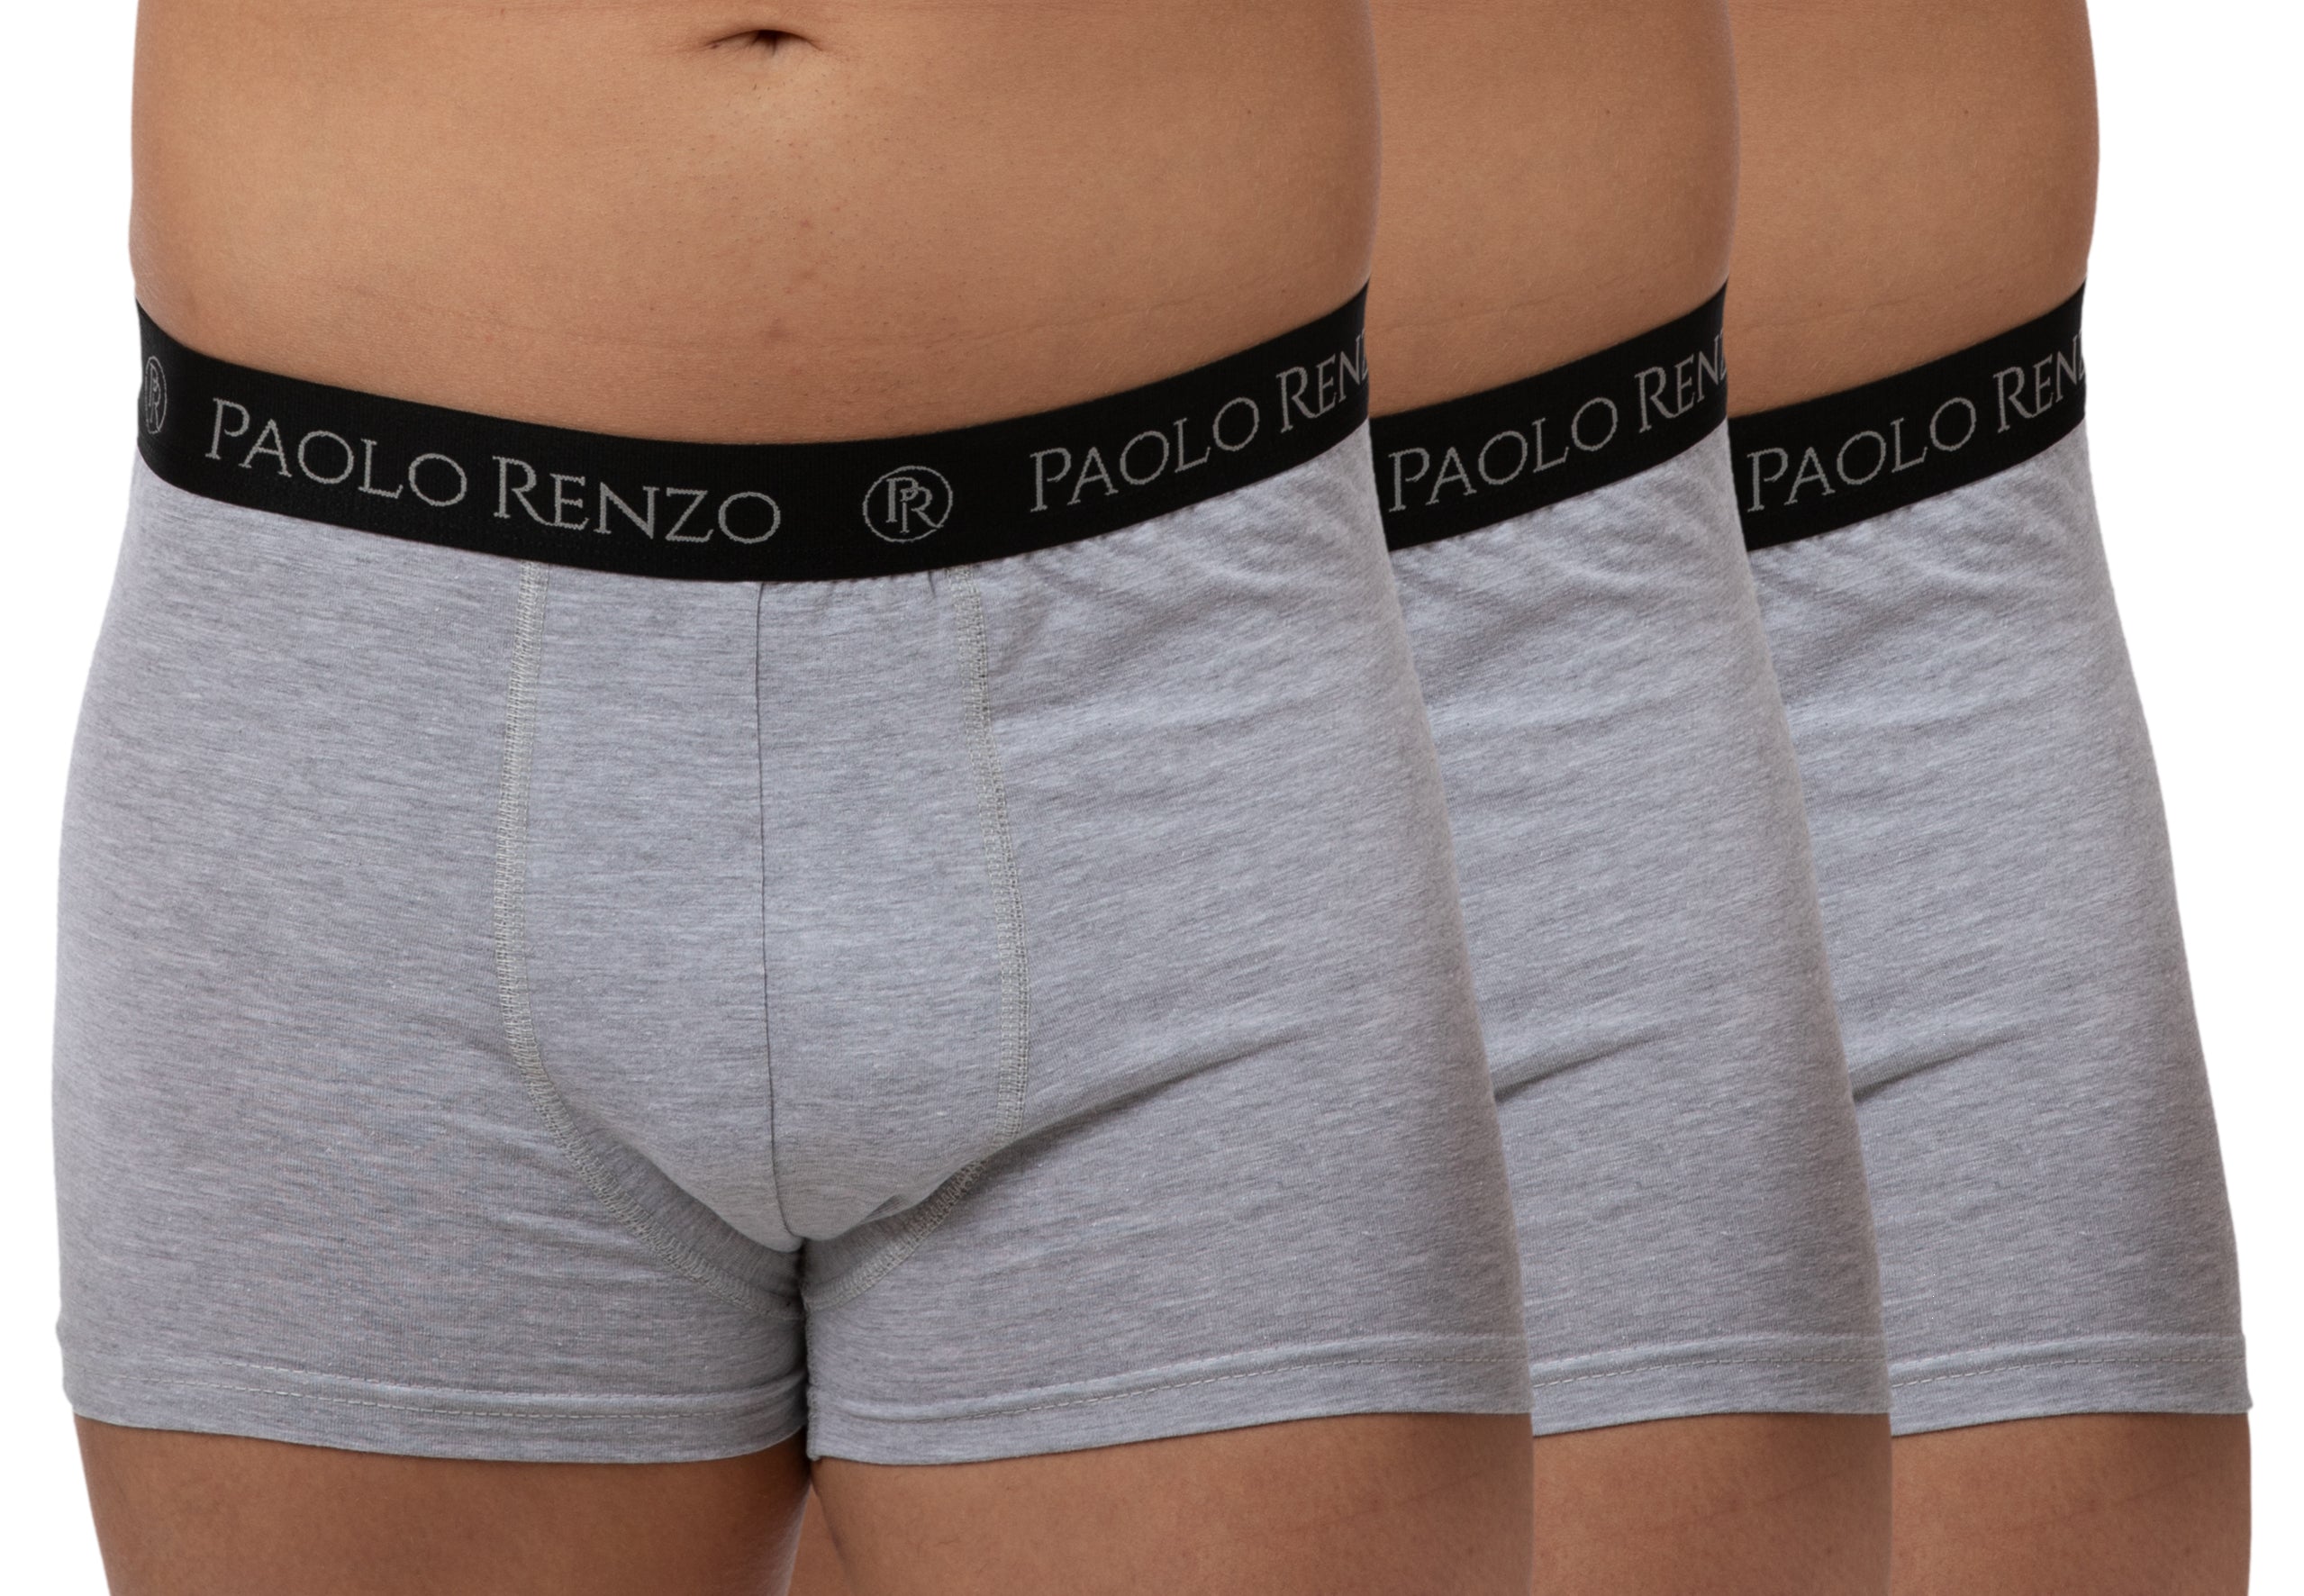 Paolo Renzo® Hipster Boxershorts 3/6 oder 12 Stück - Größen M, L, XL, XXL